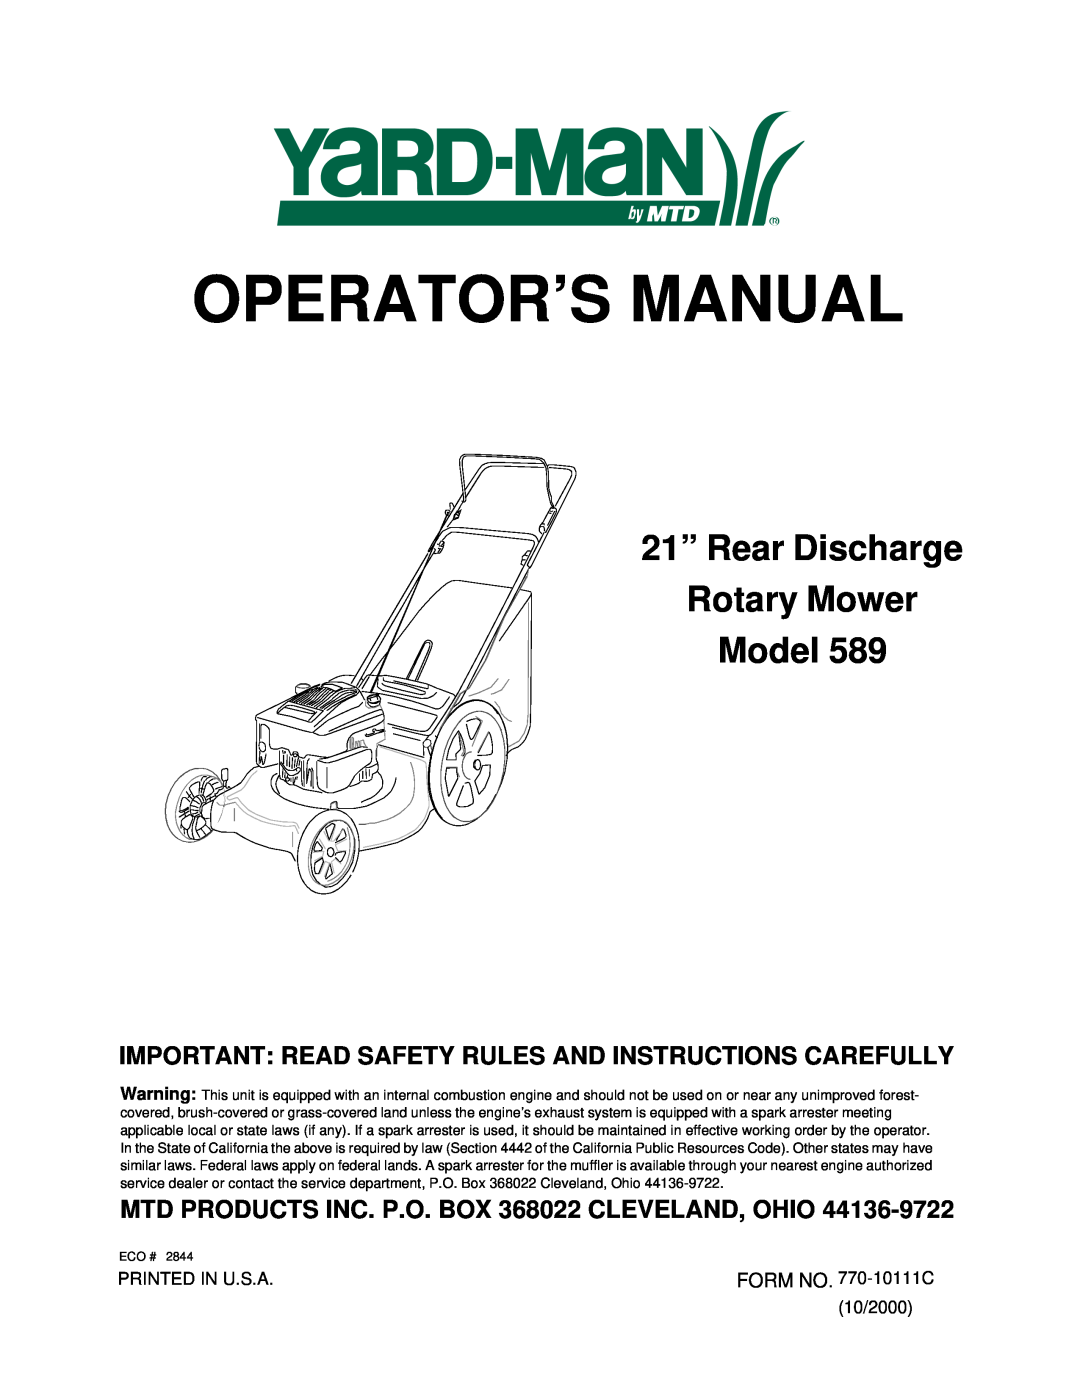 Yard-Man 589 manual Operator’S Manual, 21” Rear Discharge Rotary Mower Model 